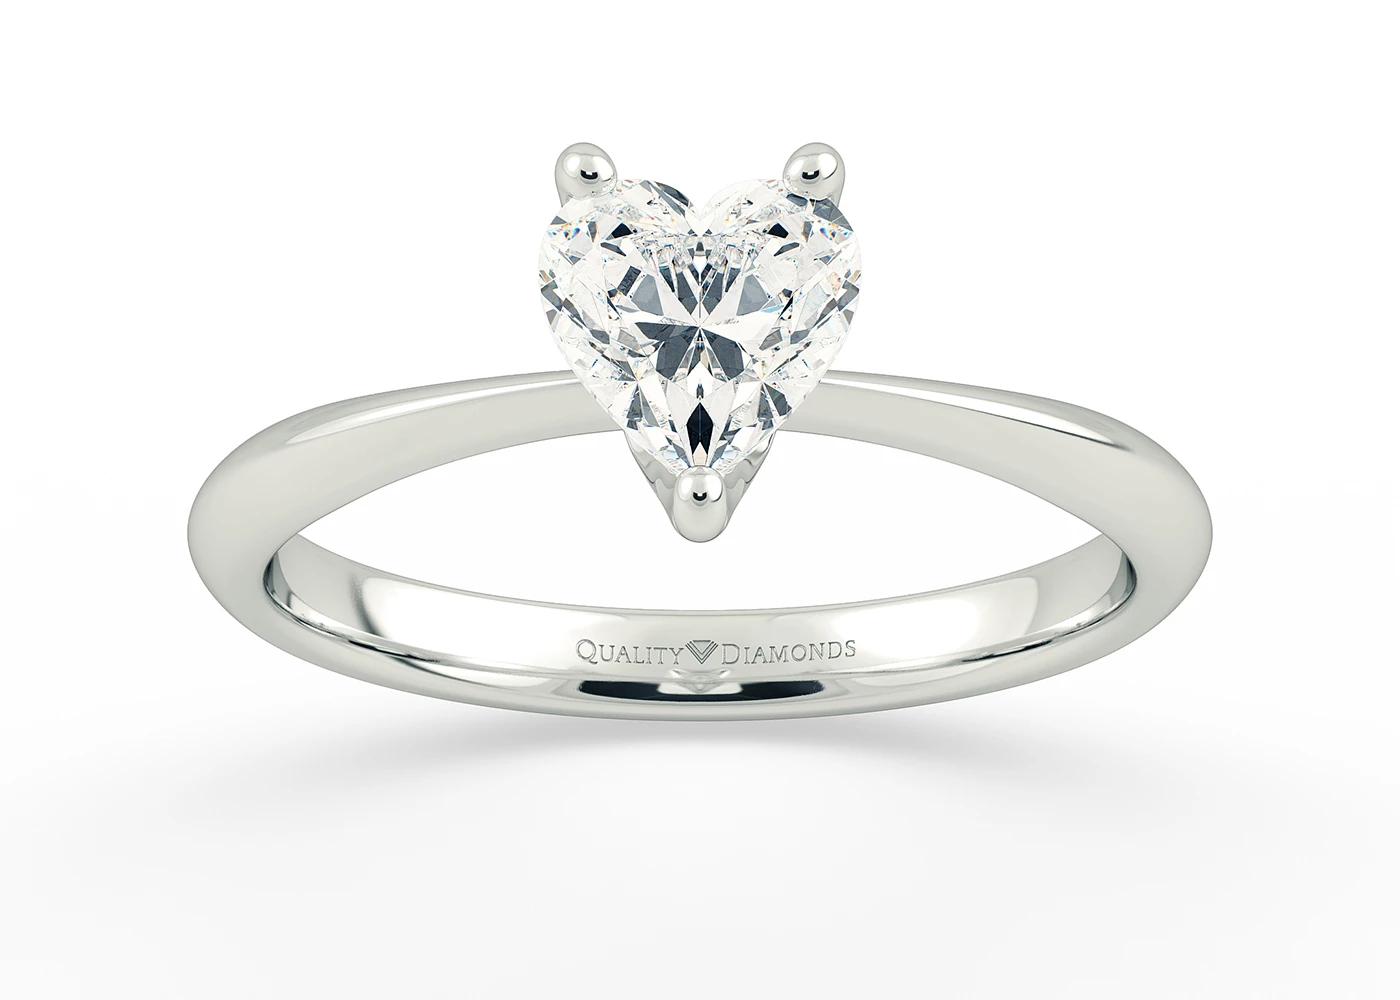 One Carat Heart Solitaire Diamond Engagement Ring in Platinum 950